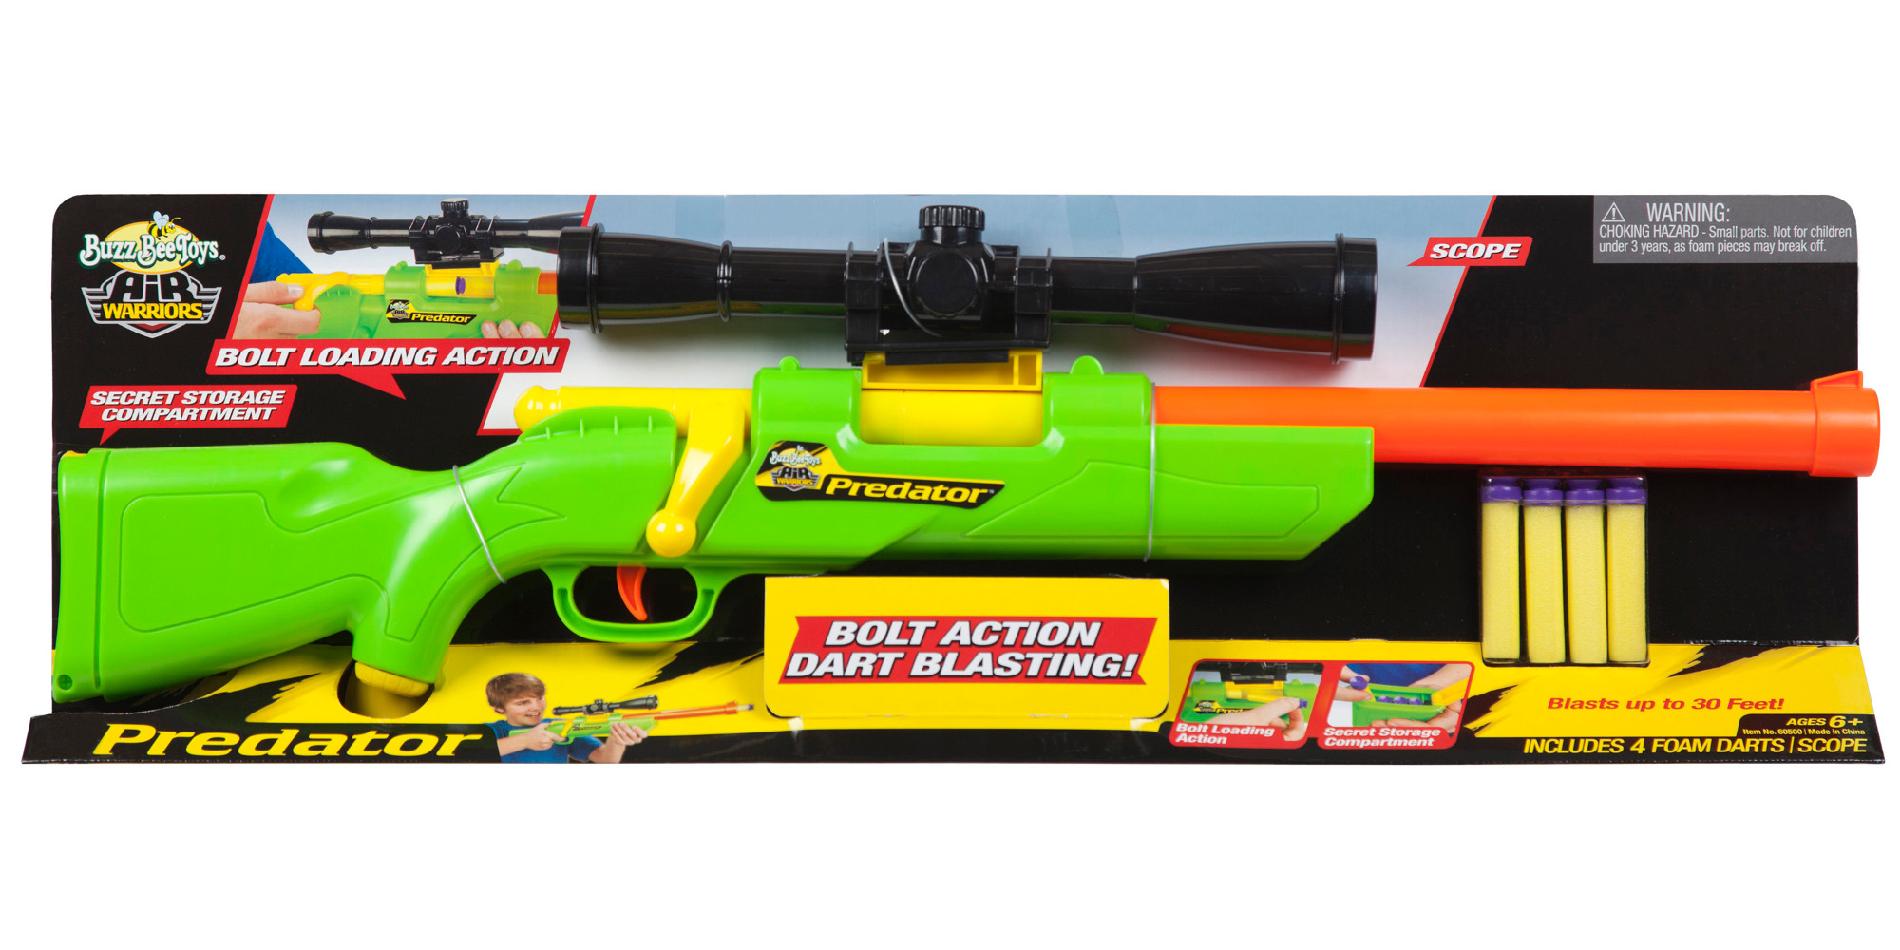 Buzz Bee Toys Air Warriors® Predator   Foam Dart Gun   Toys & Games